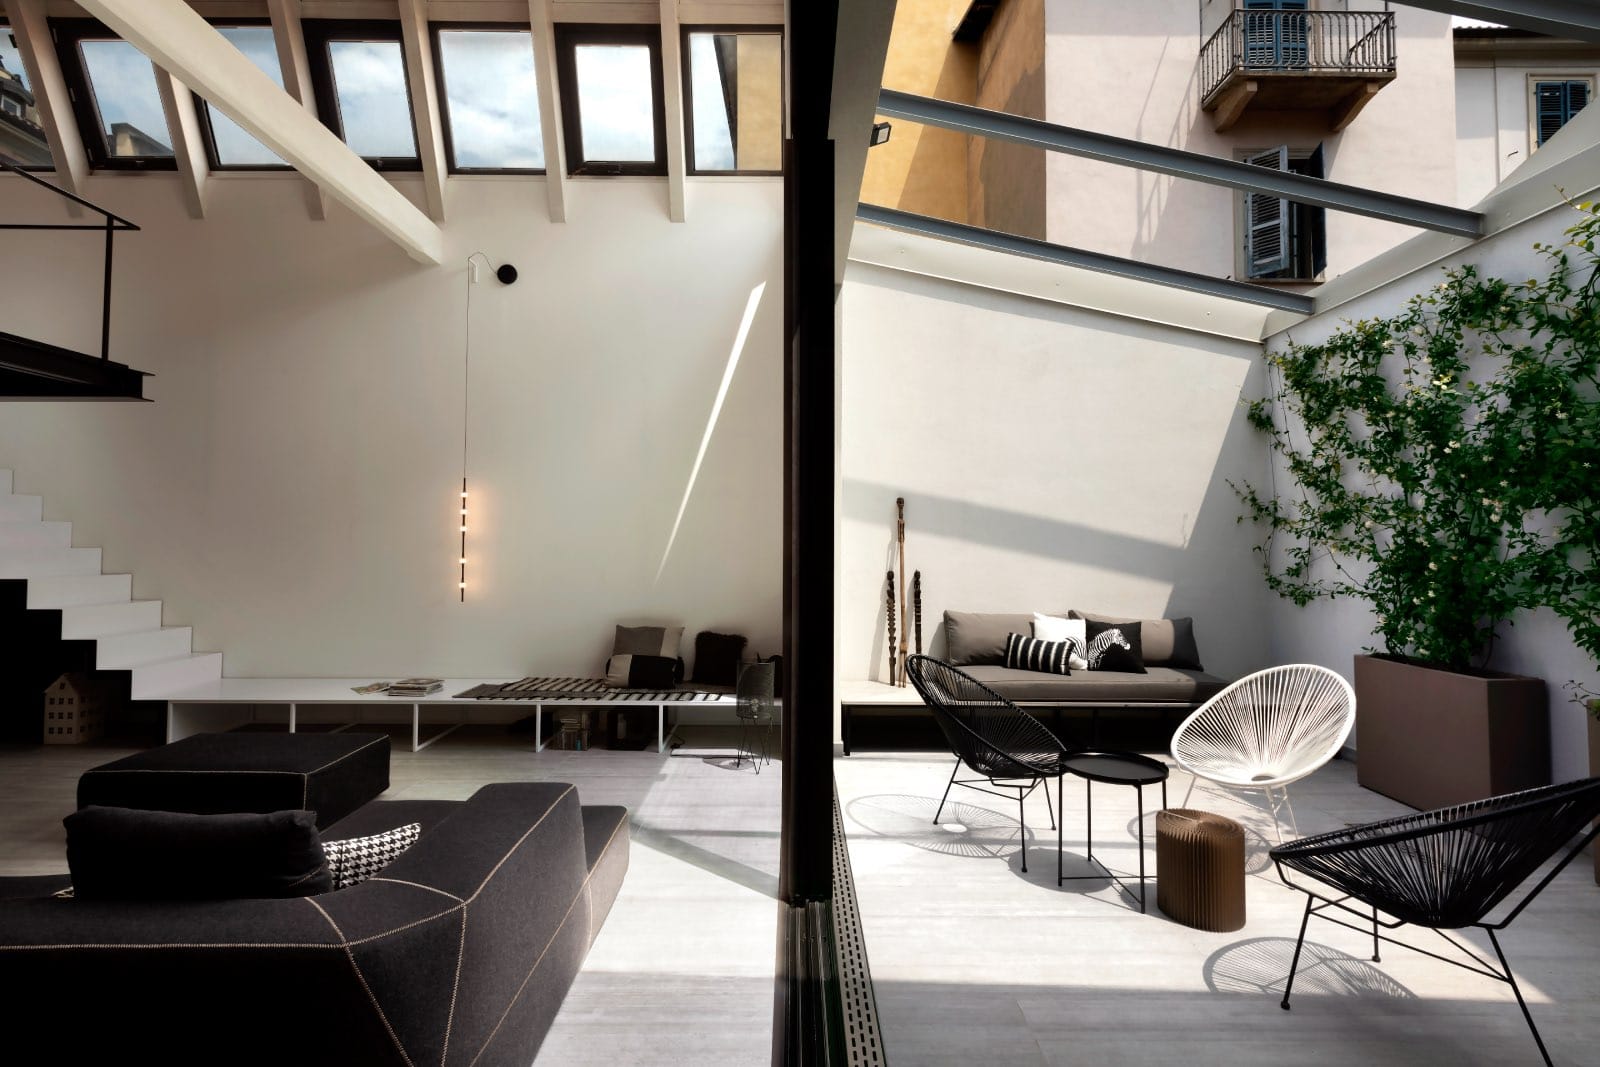 indoor-outdoor industrial-style loft with terrace in Italy